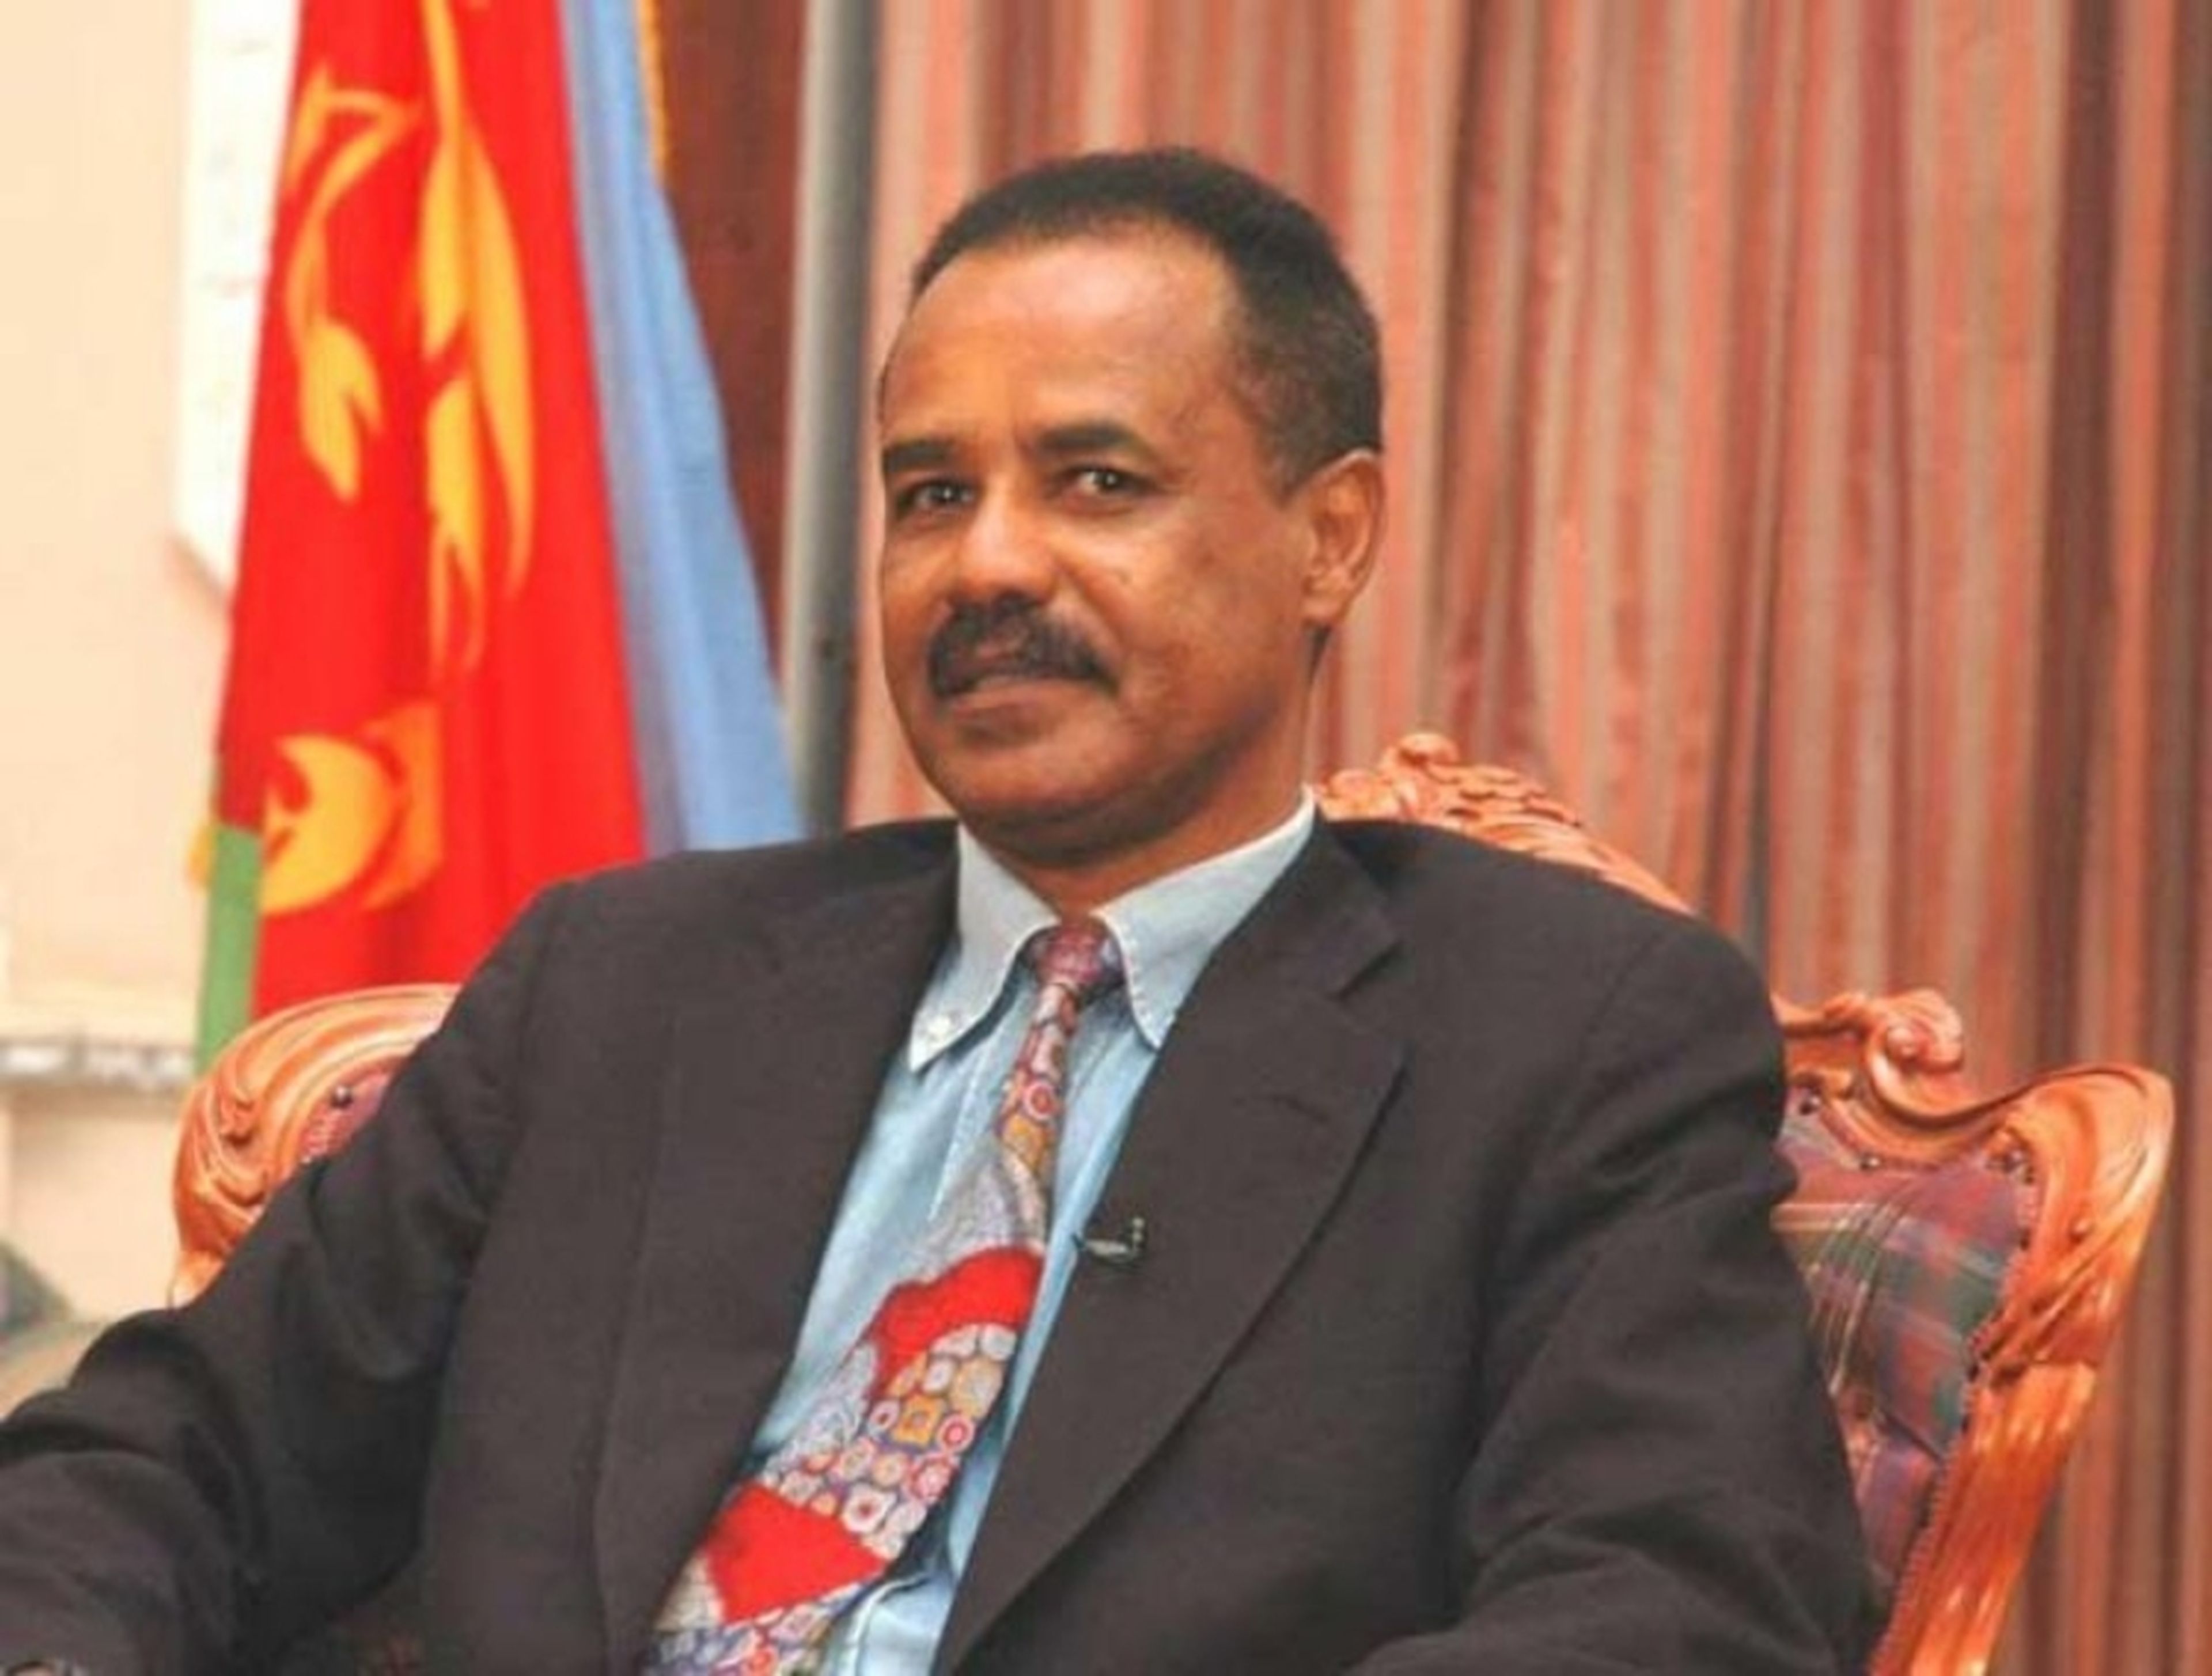 Isaias Afewerki, dictador de Eritrea desde 1991